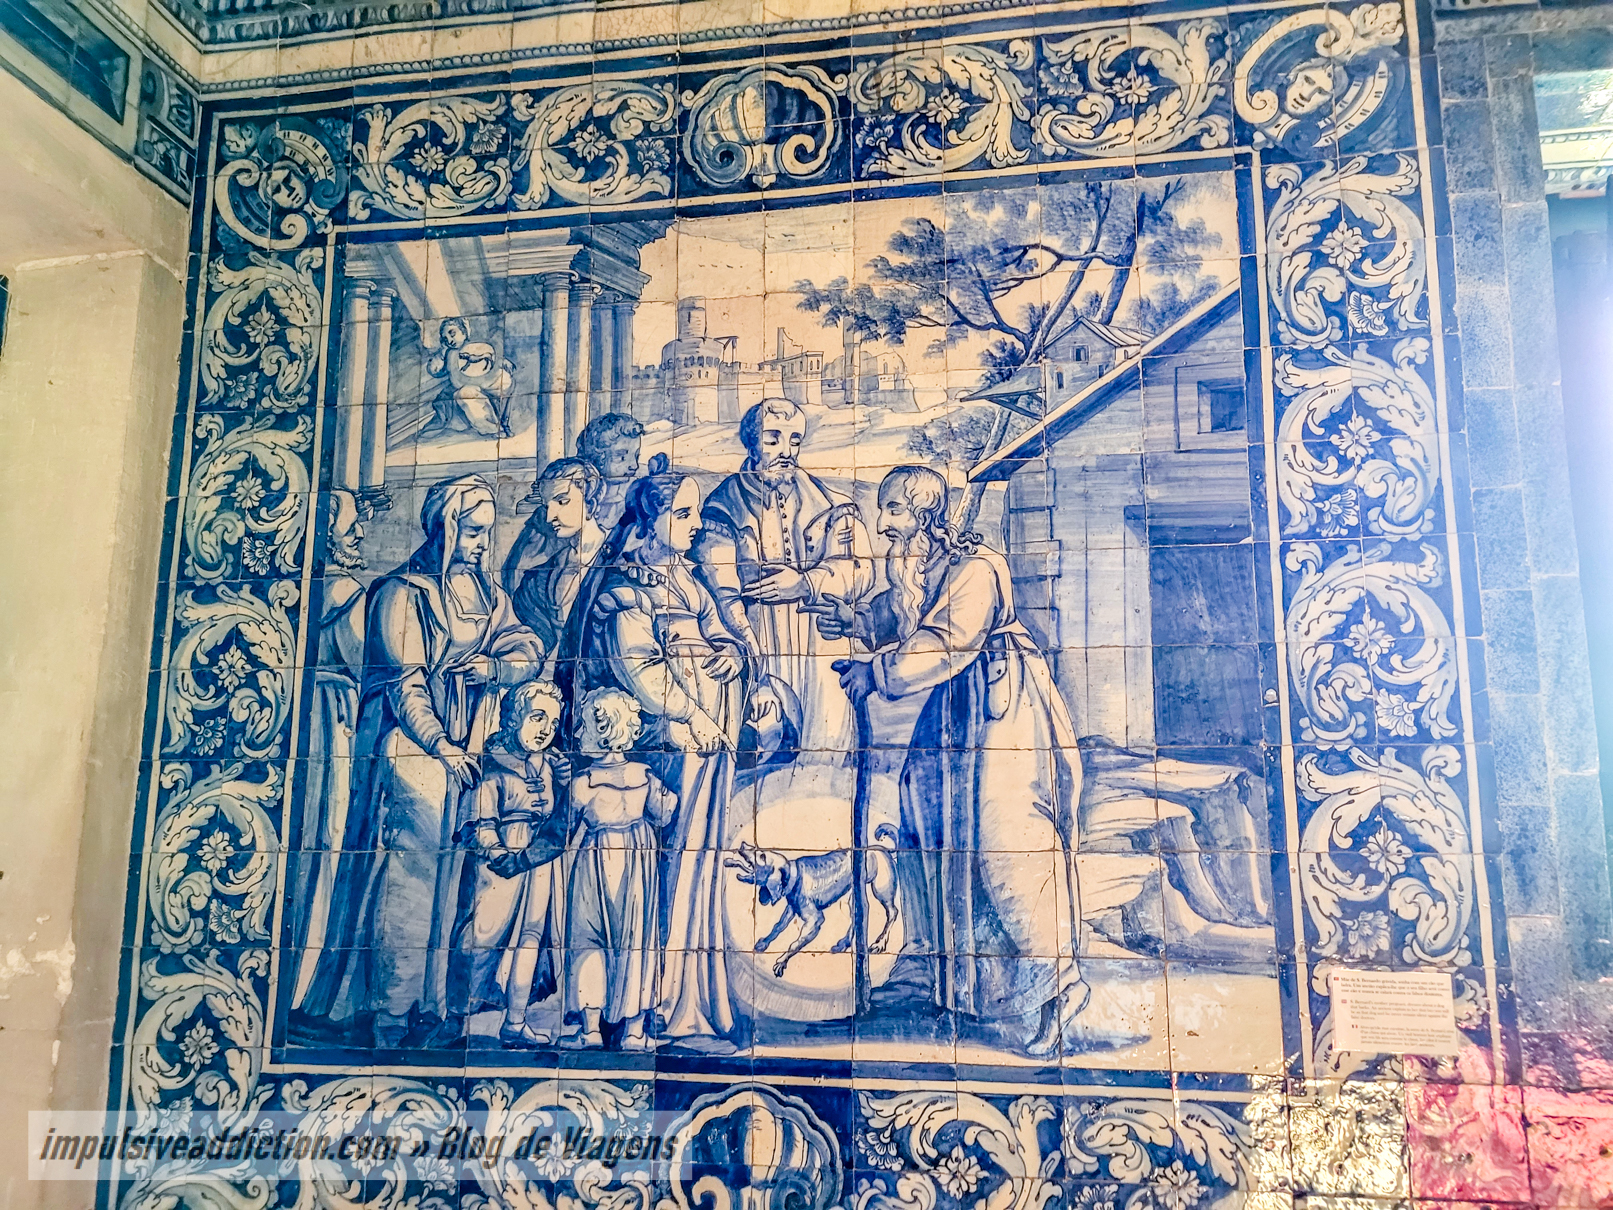 Example of tiles from the Monastery of Santa Maria de Coz